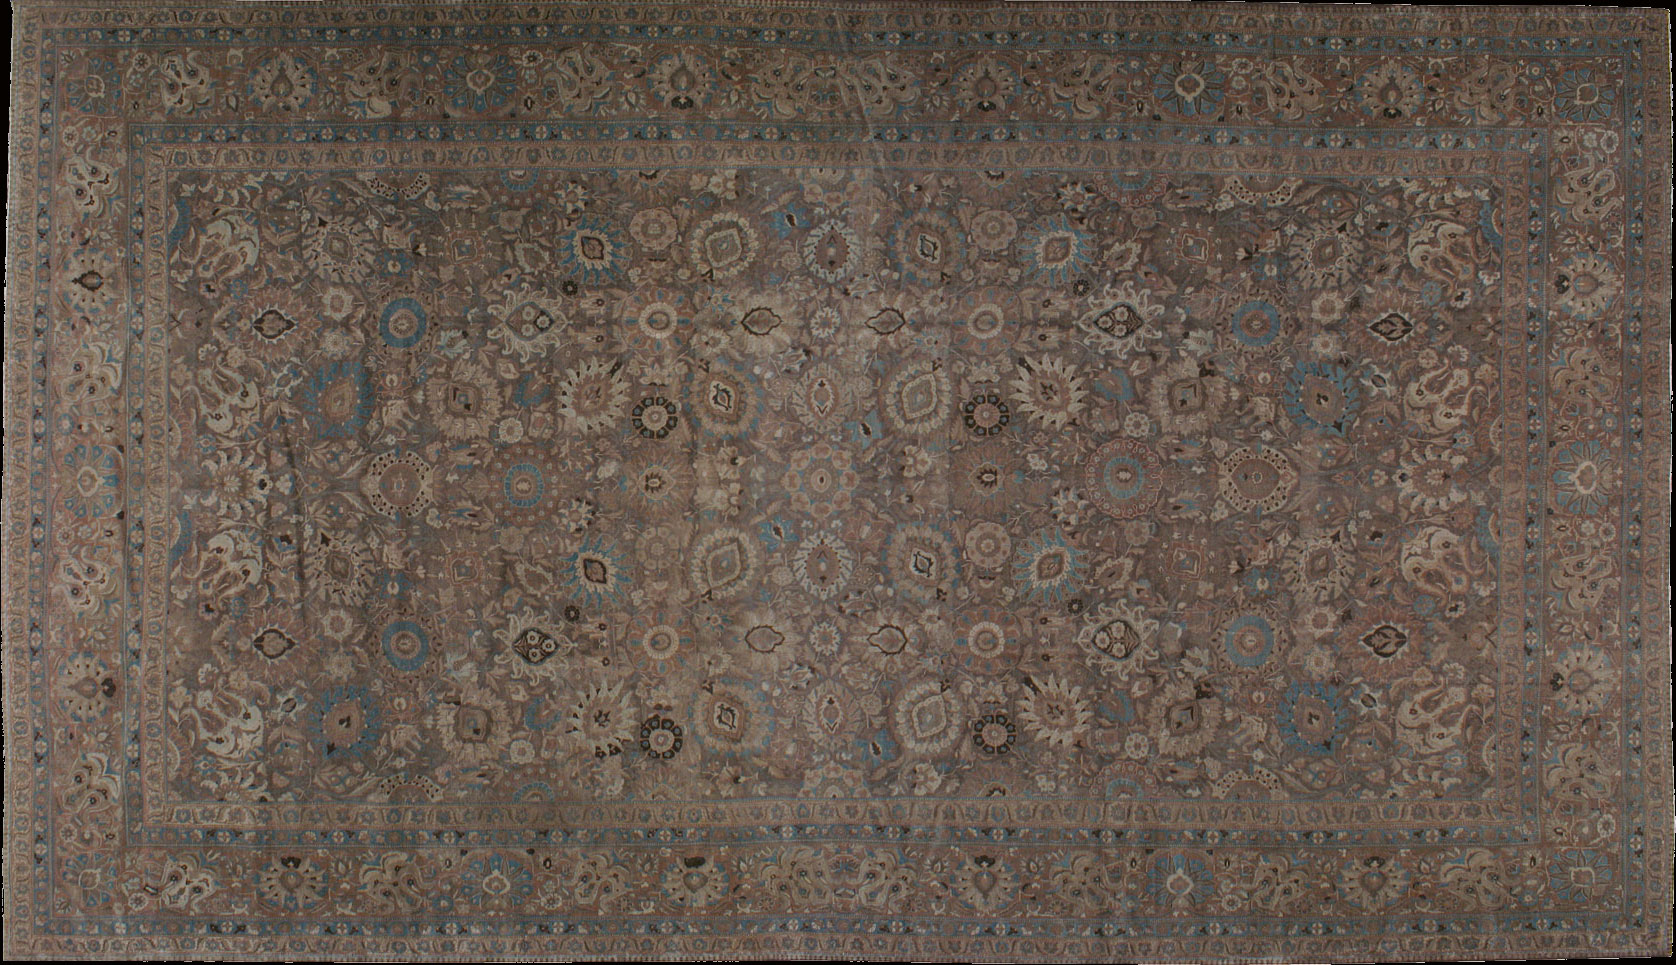 Antique tabriz Carpet - # 11307